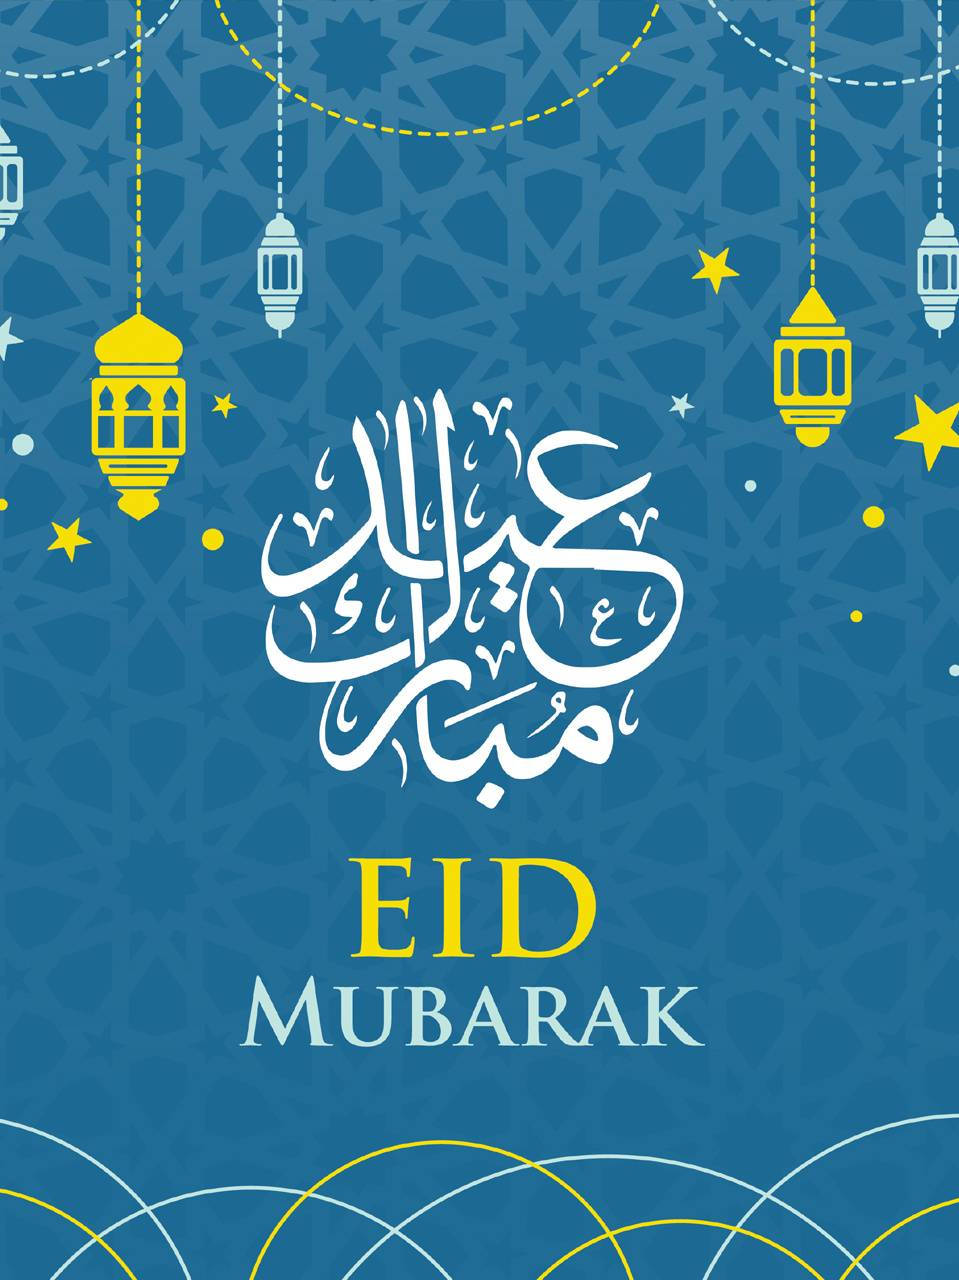 Caption: Celebrating The Spirit Of Eid Mubarak Wallpaper